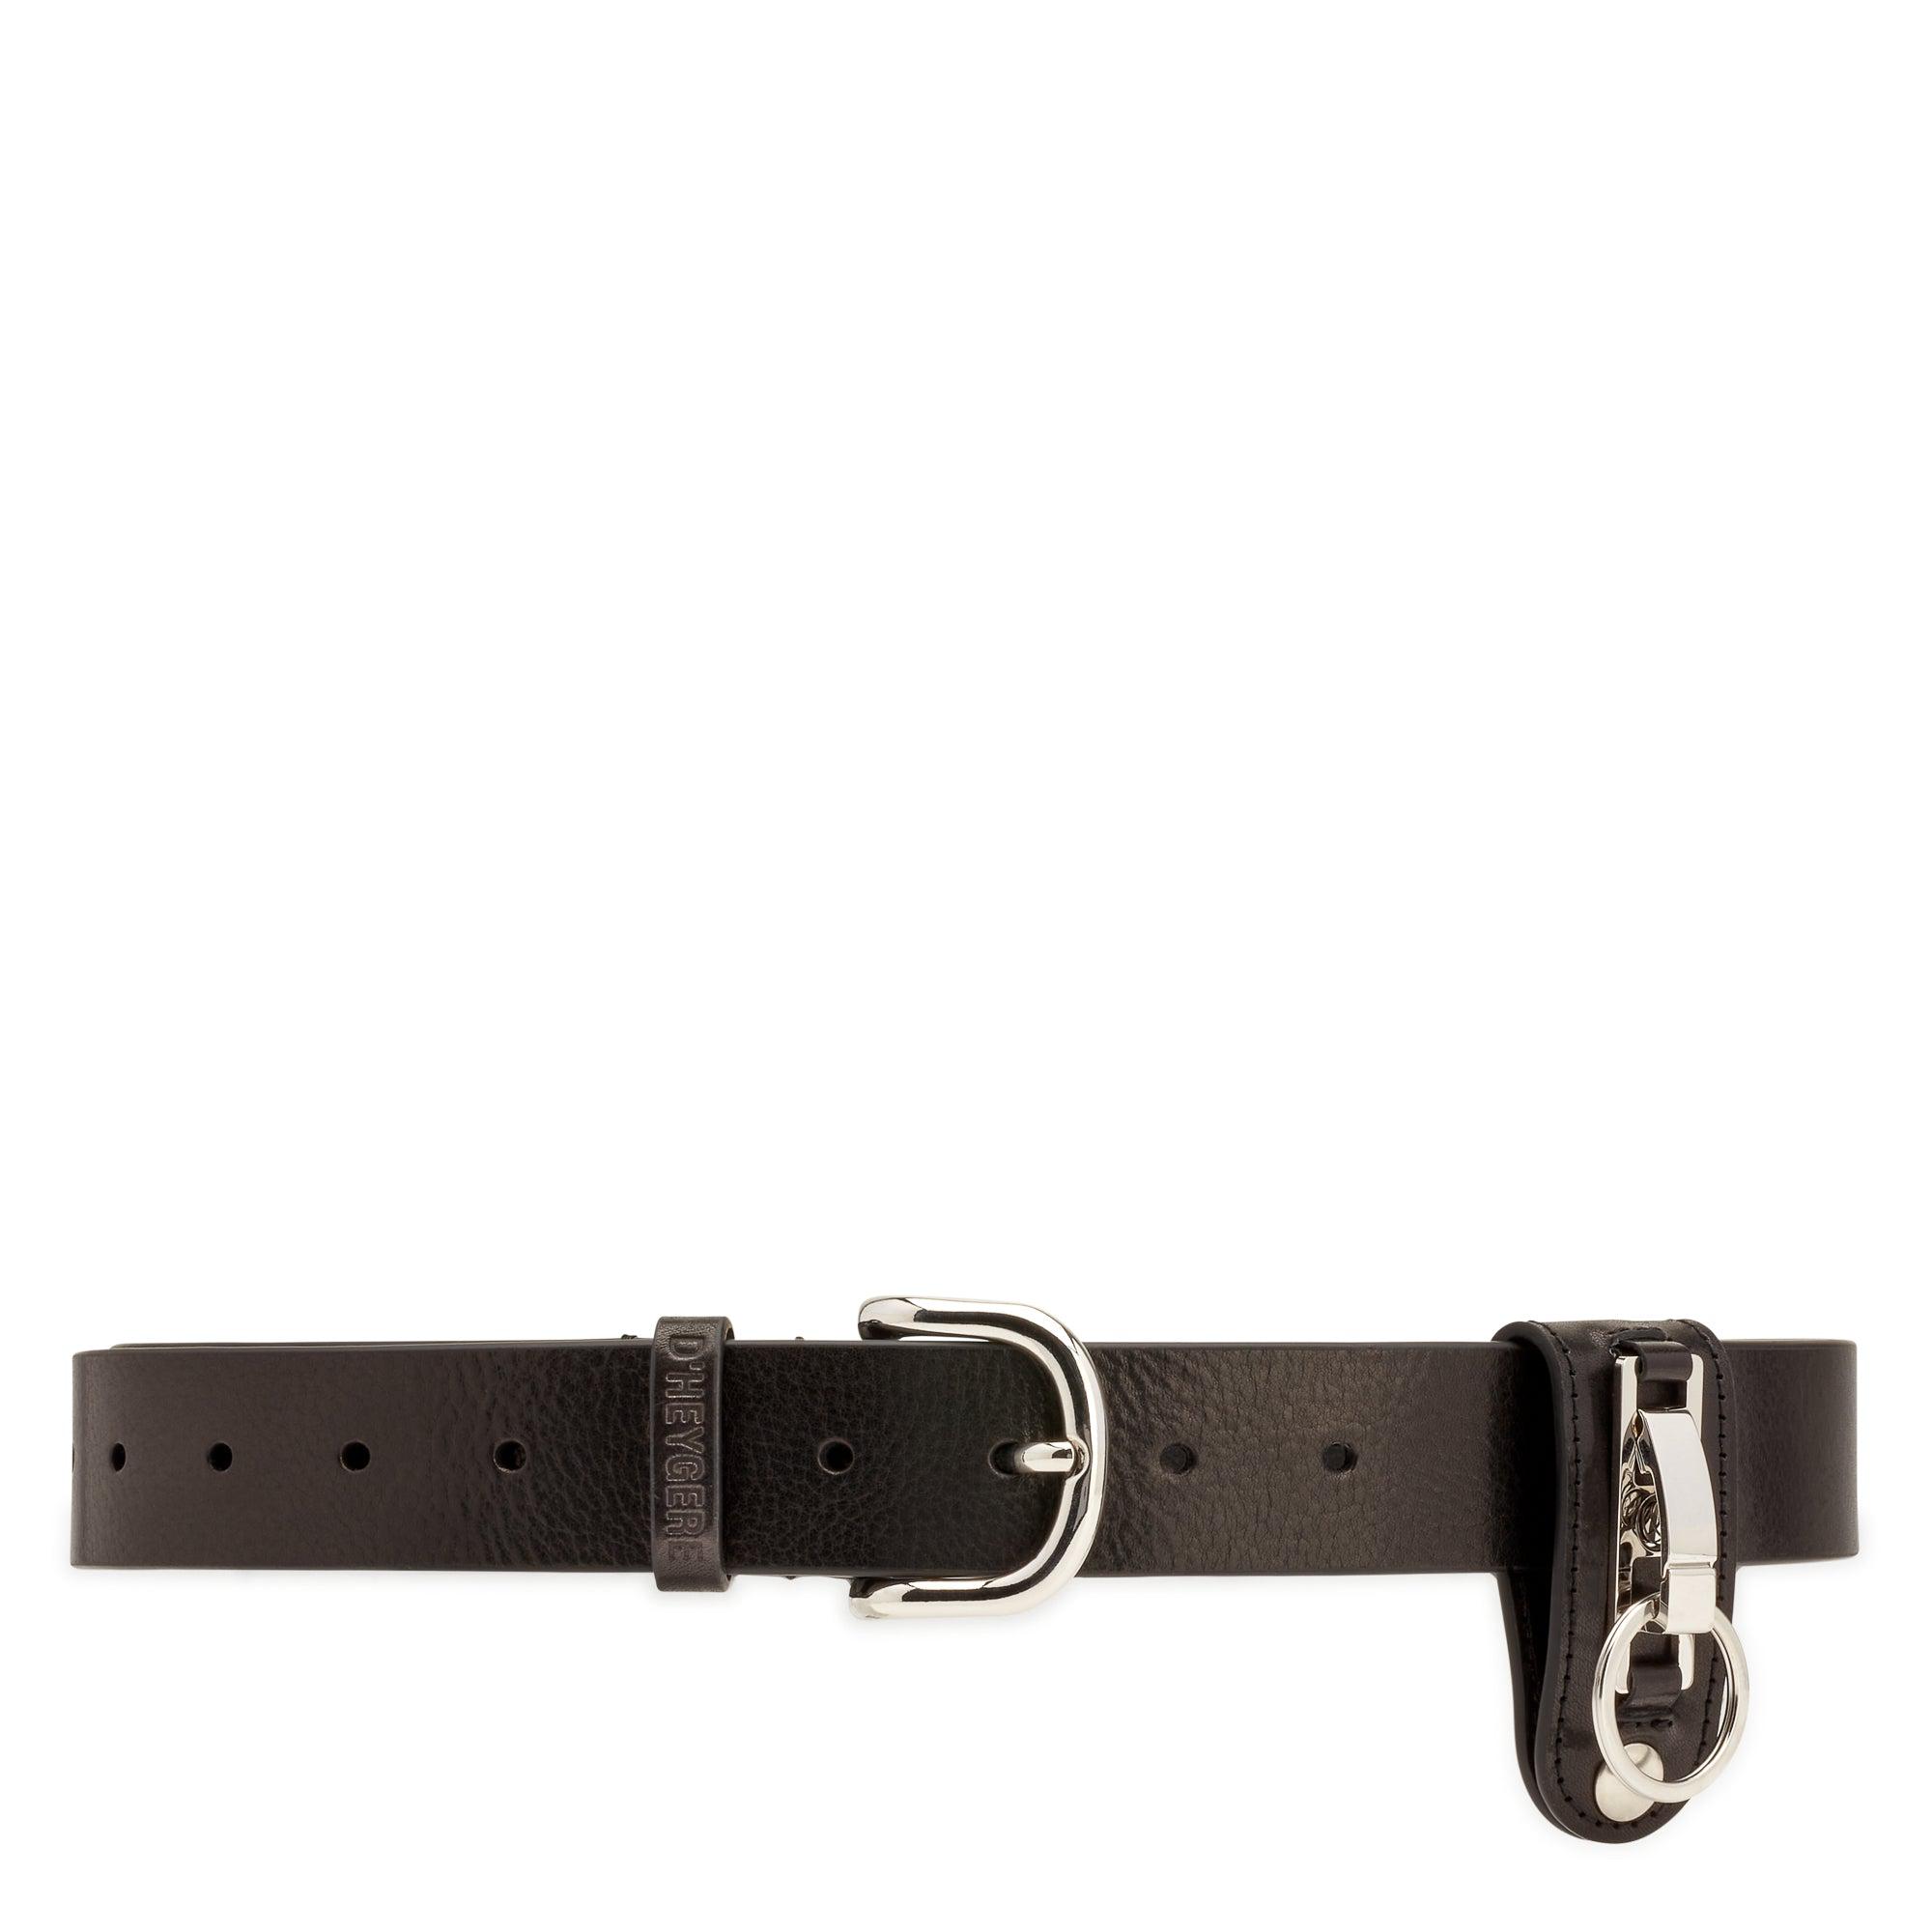 D'Heygere Key Hanger Belt (Black) by D'HEYGERE